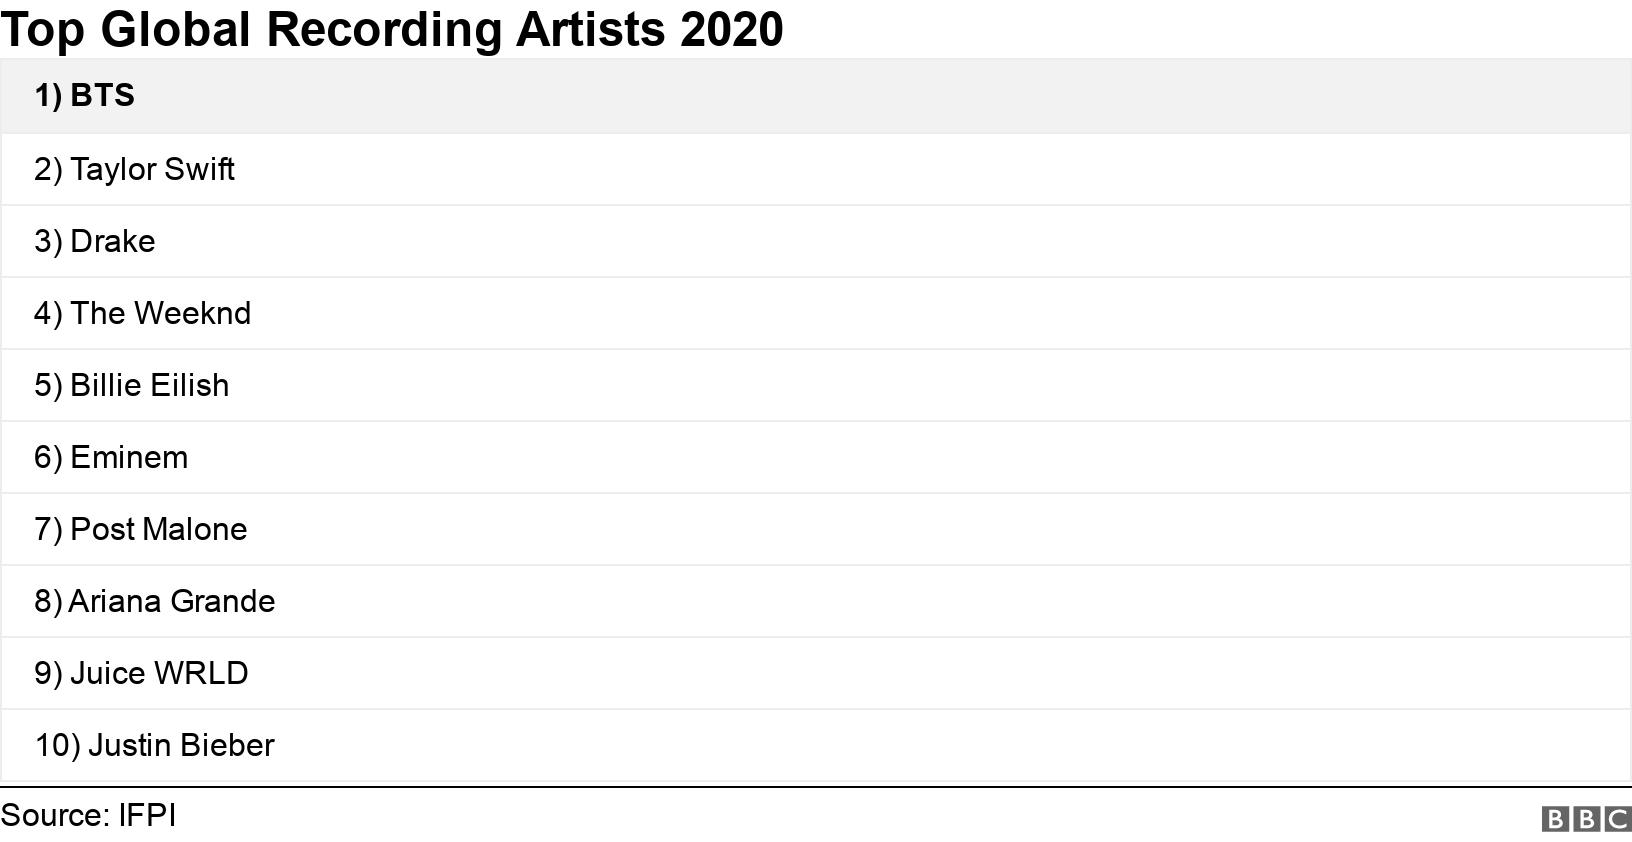 BTS world's artists 2020 - BBC